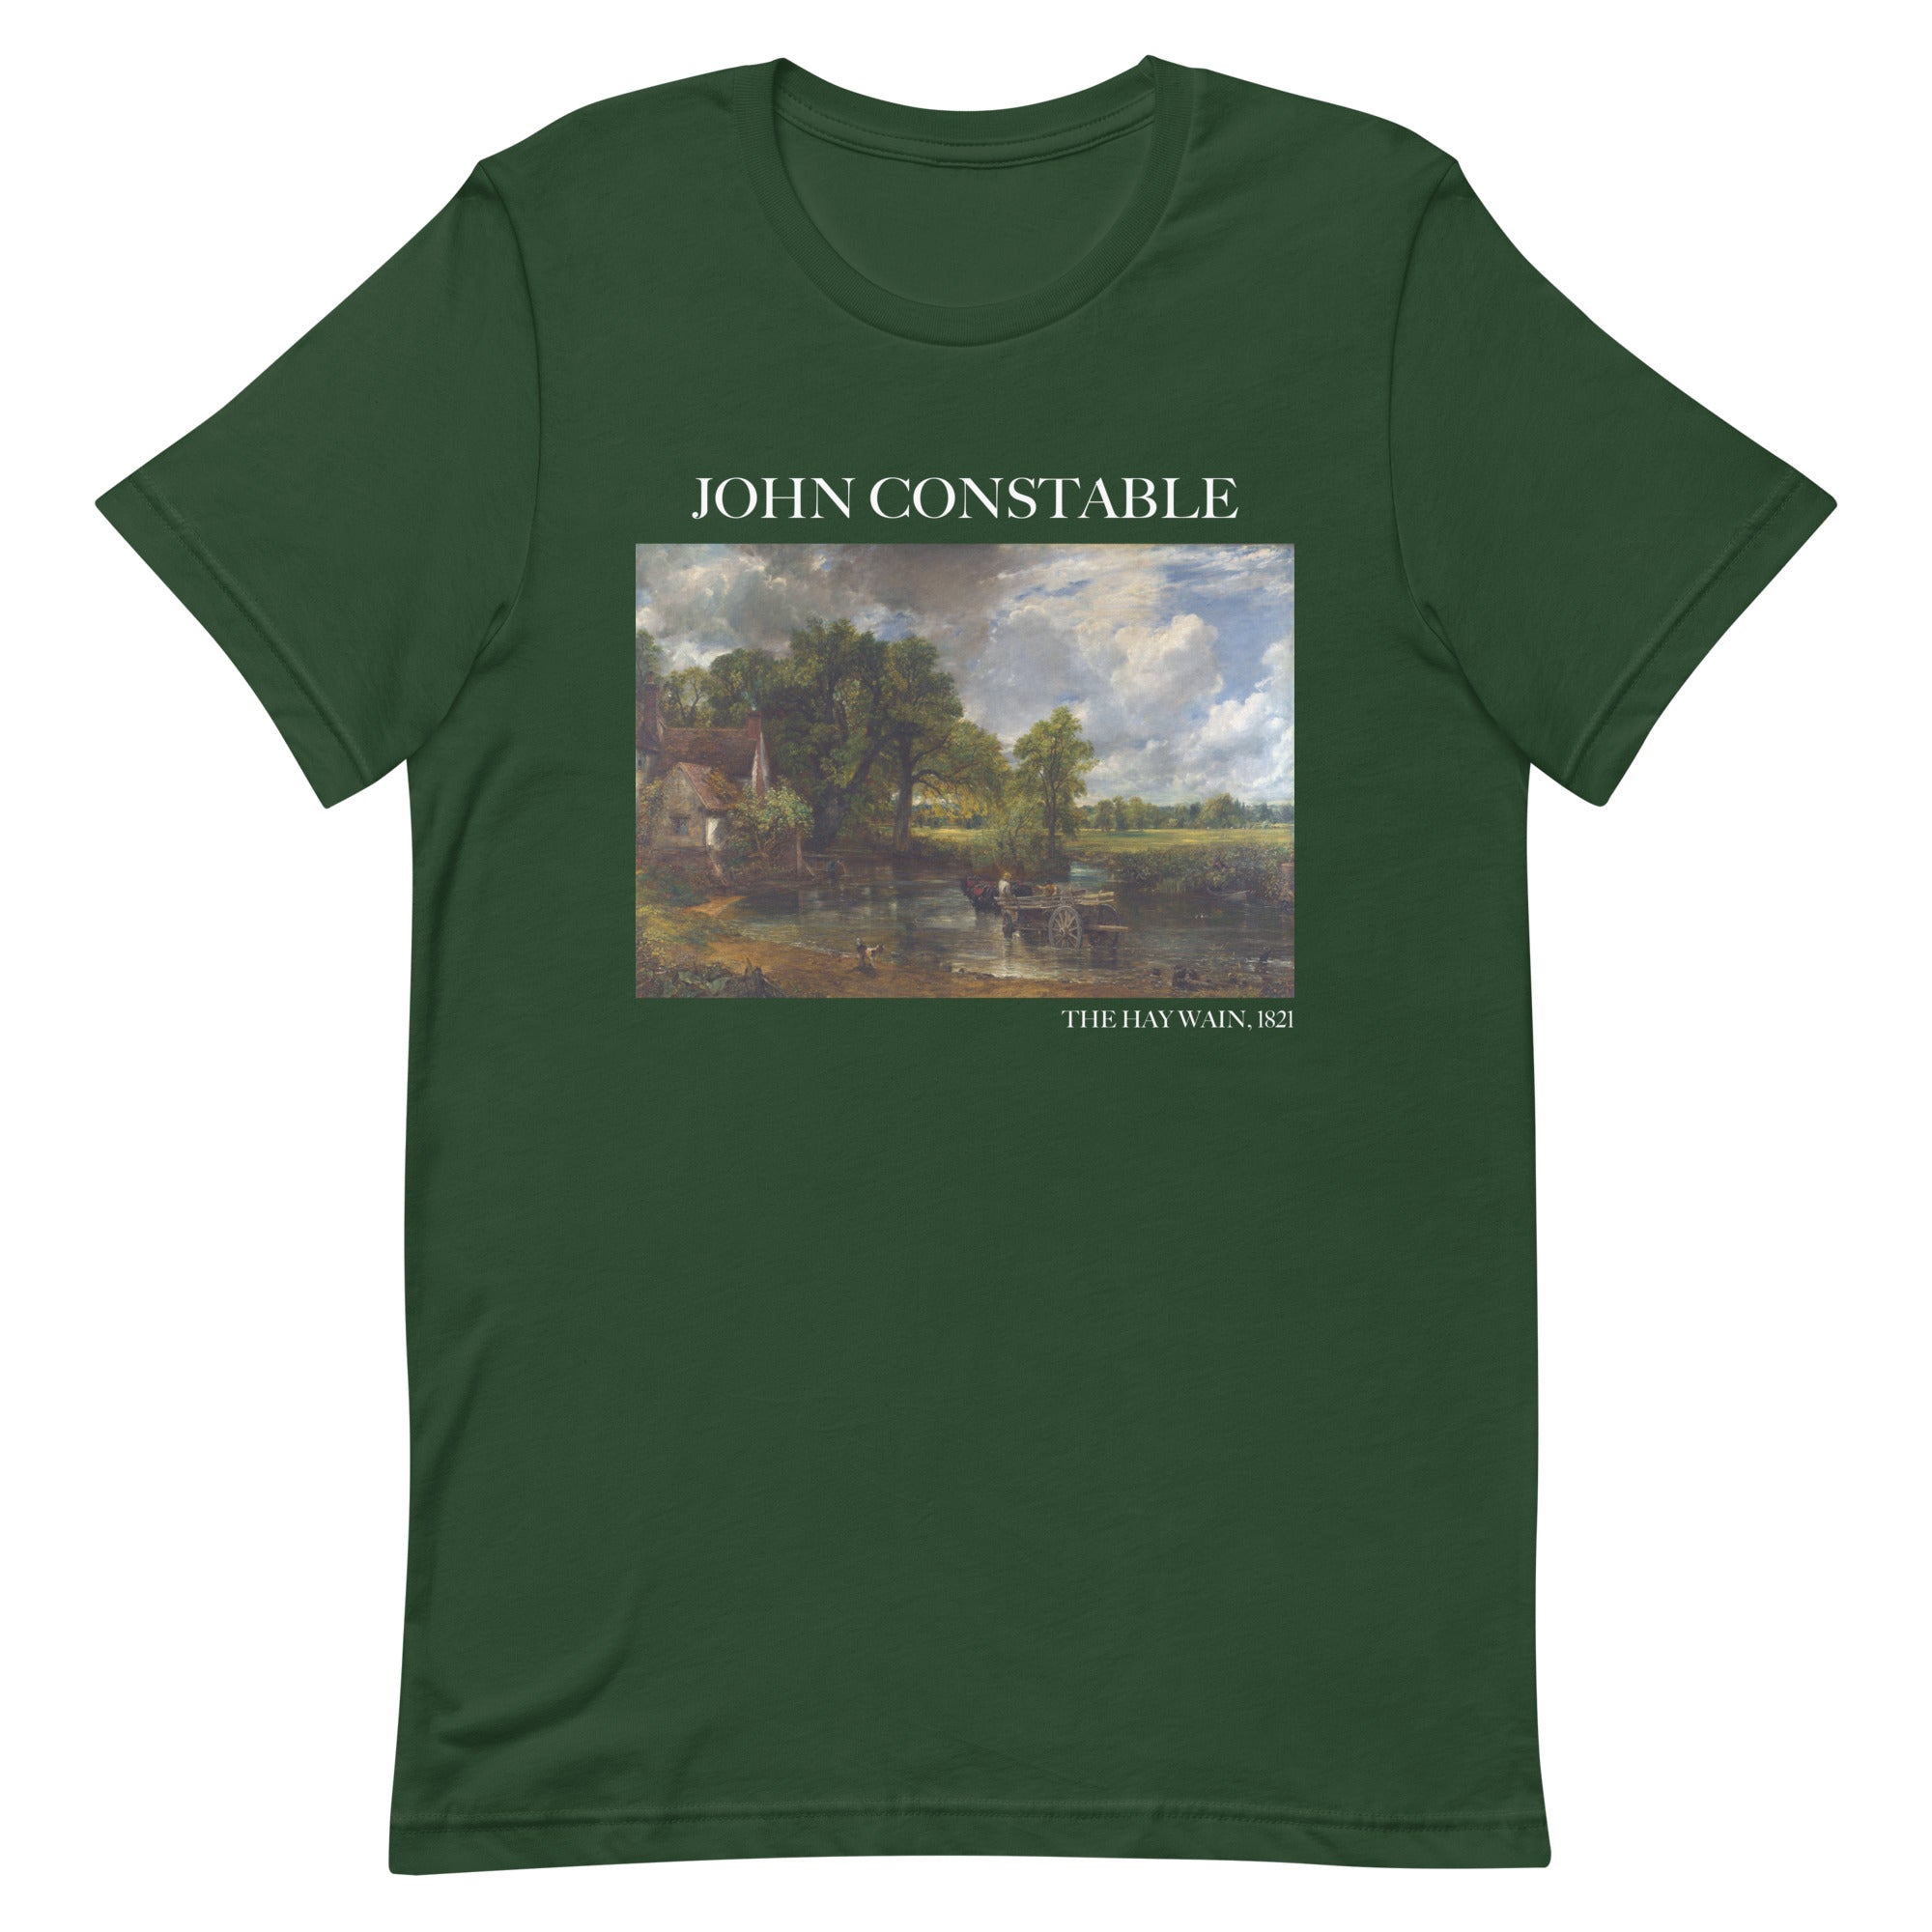 T-Shirt mit berühmtem Gemälde „The Hay Wain“ von John Constable | Unisex-T-Shirt im klassischen Kunststil